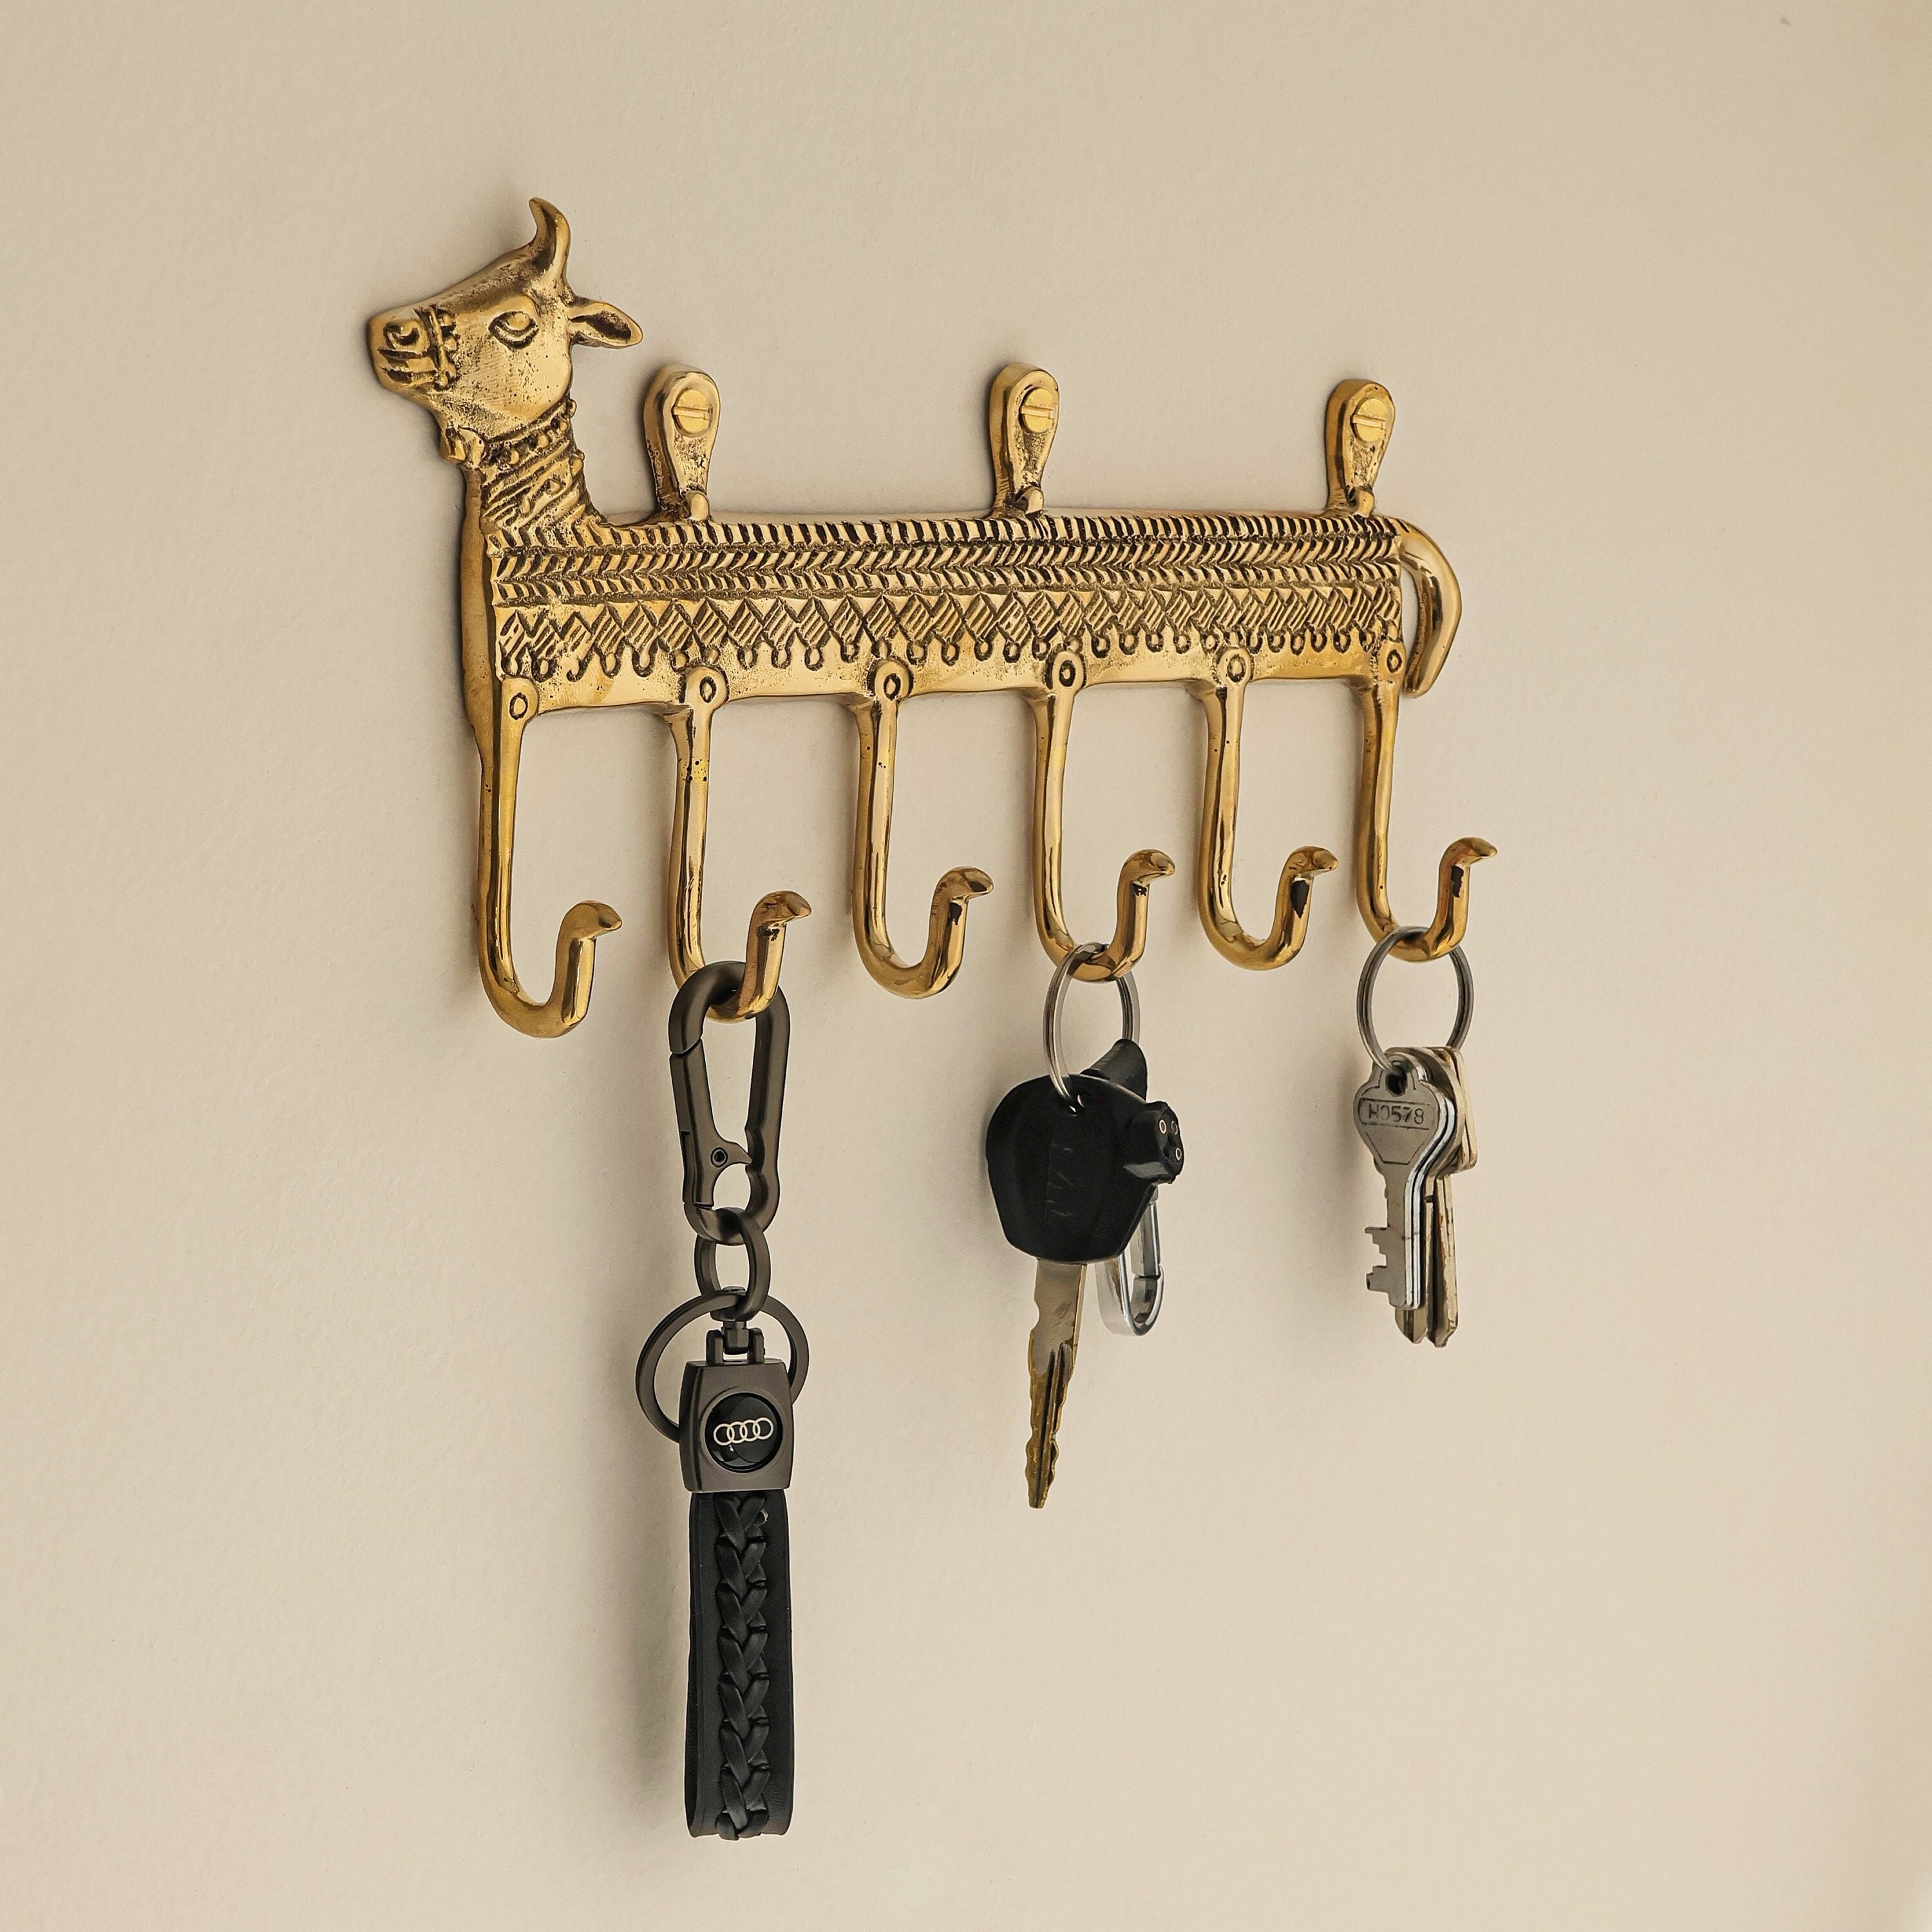  FairyCity Keys Holder for Wall Metal Vintage Keys Hook